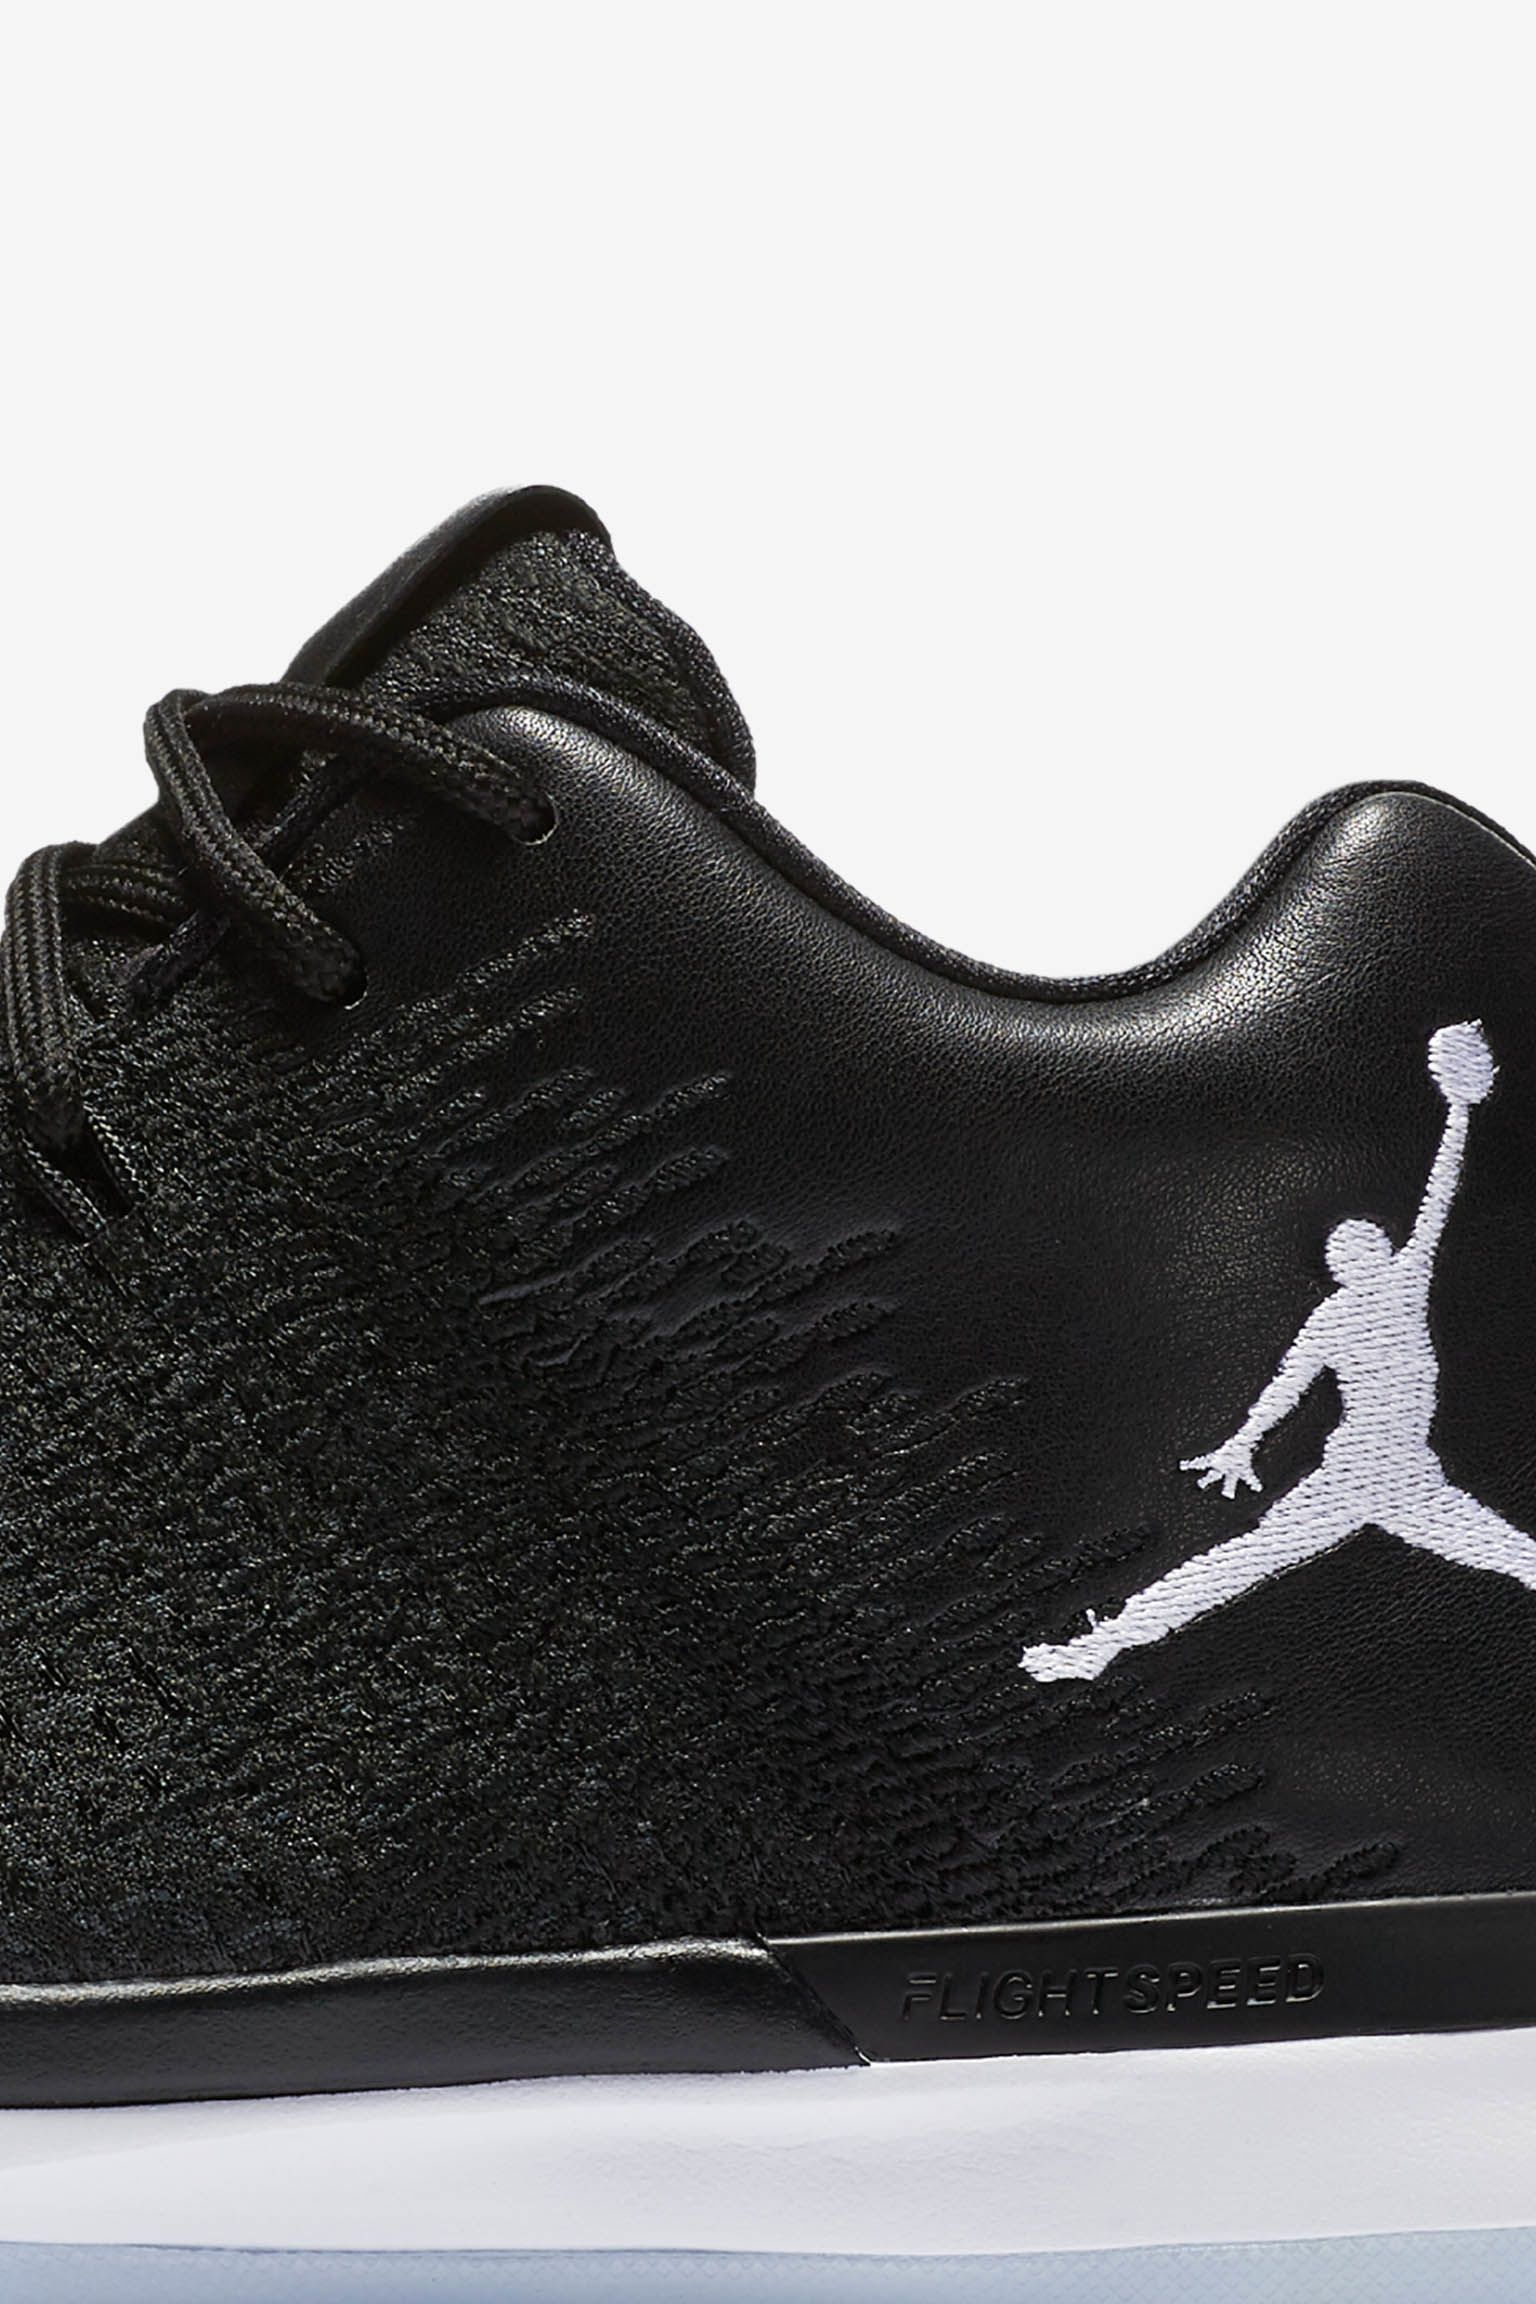 Air Jordan Xxxi Low Black White Release Date Nike Snkrs